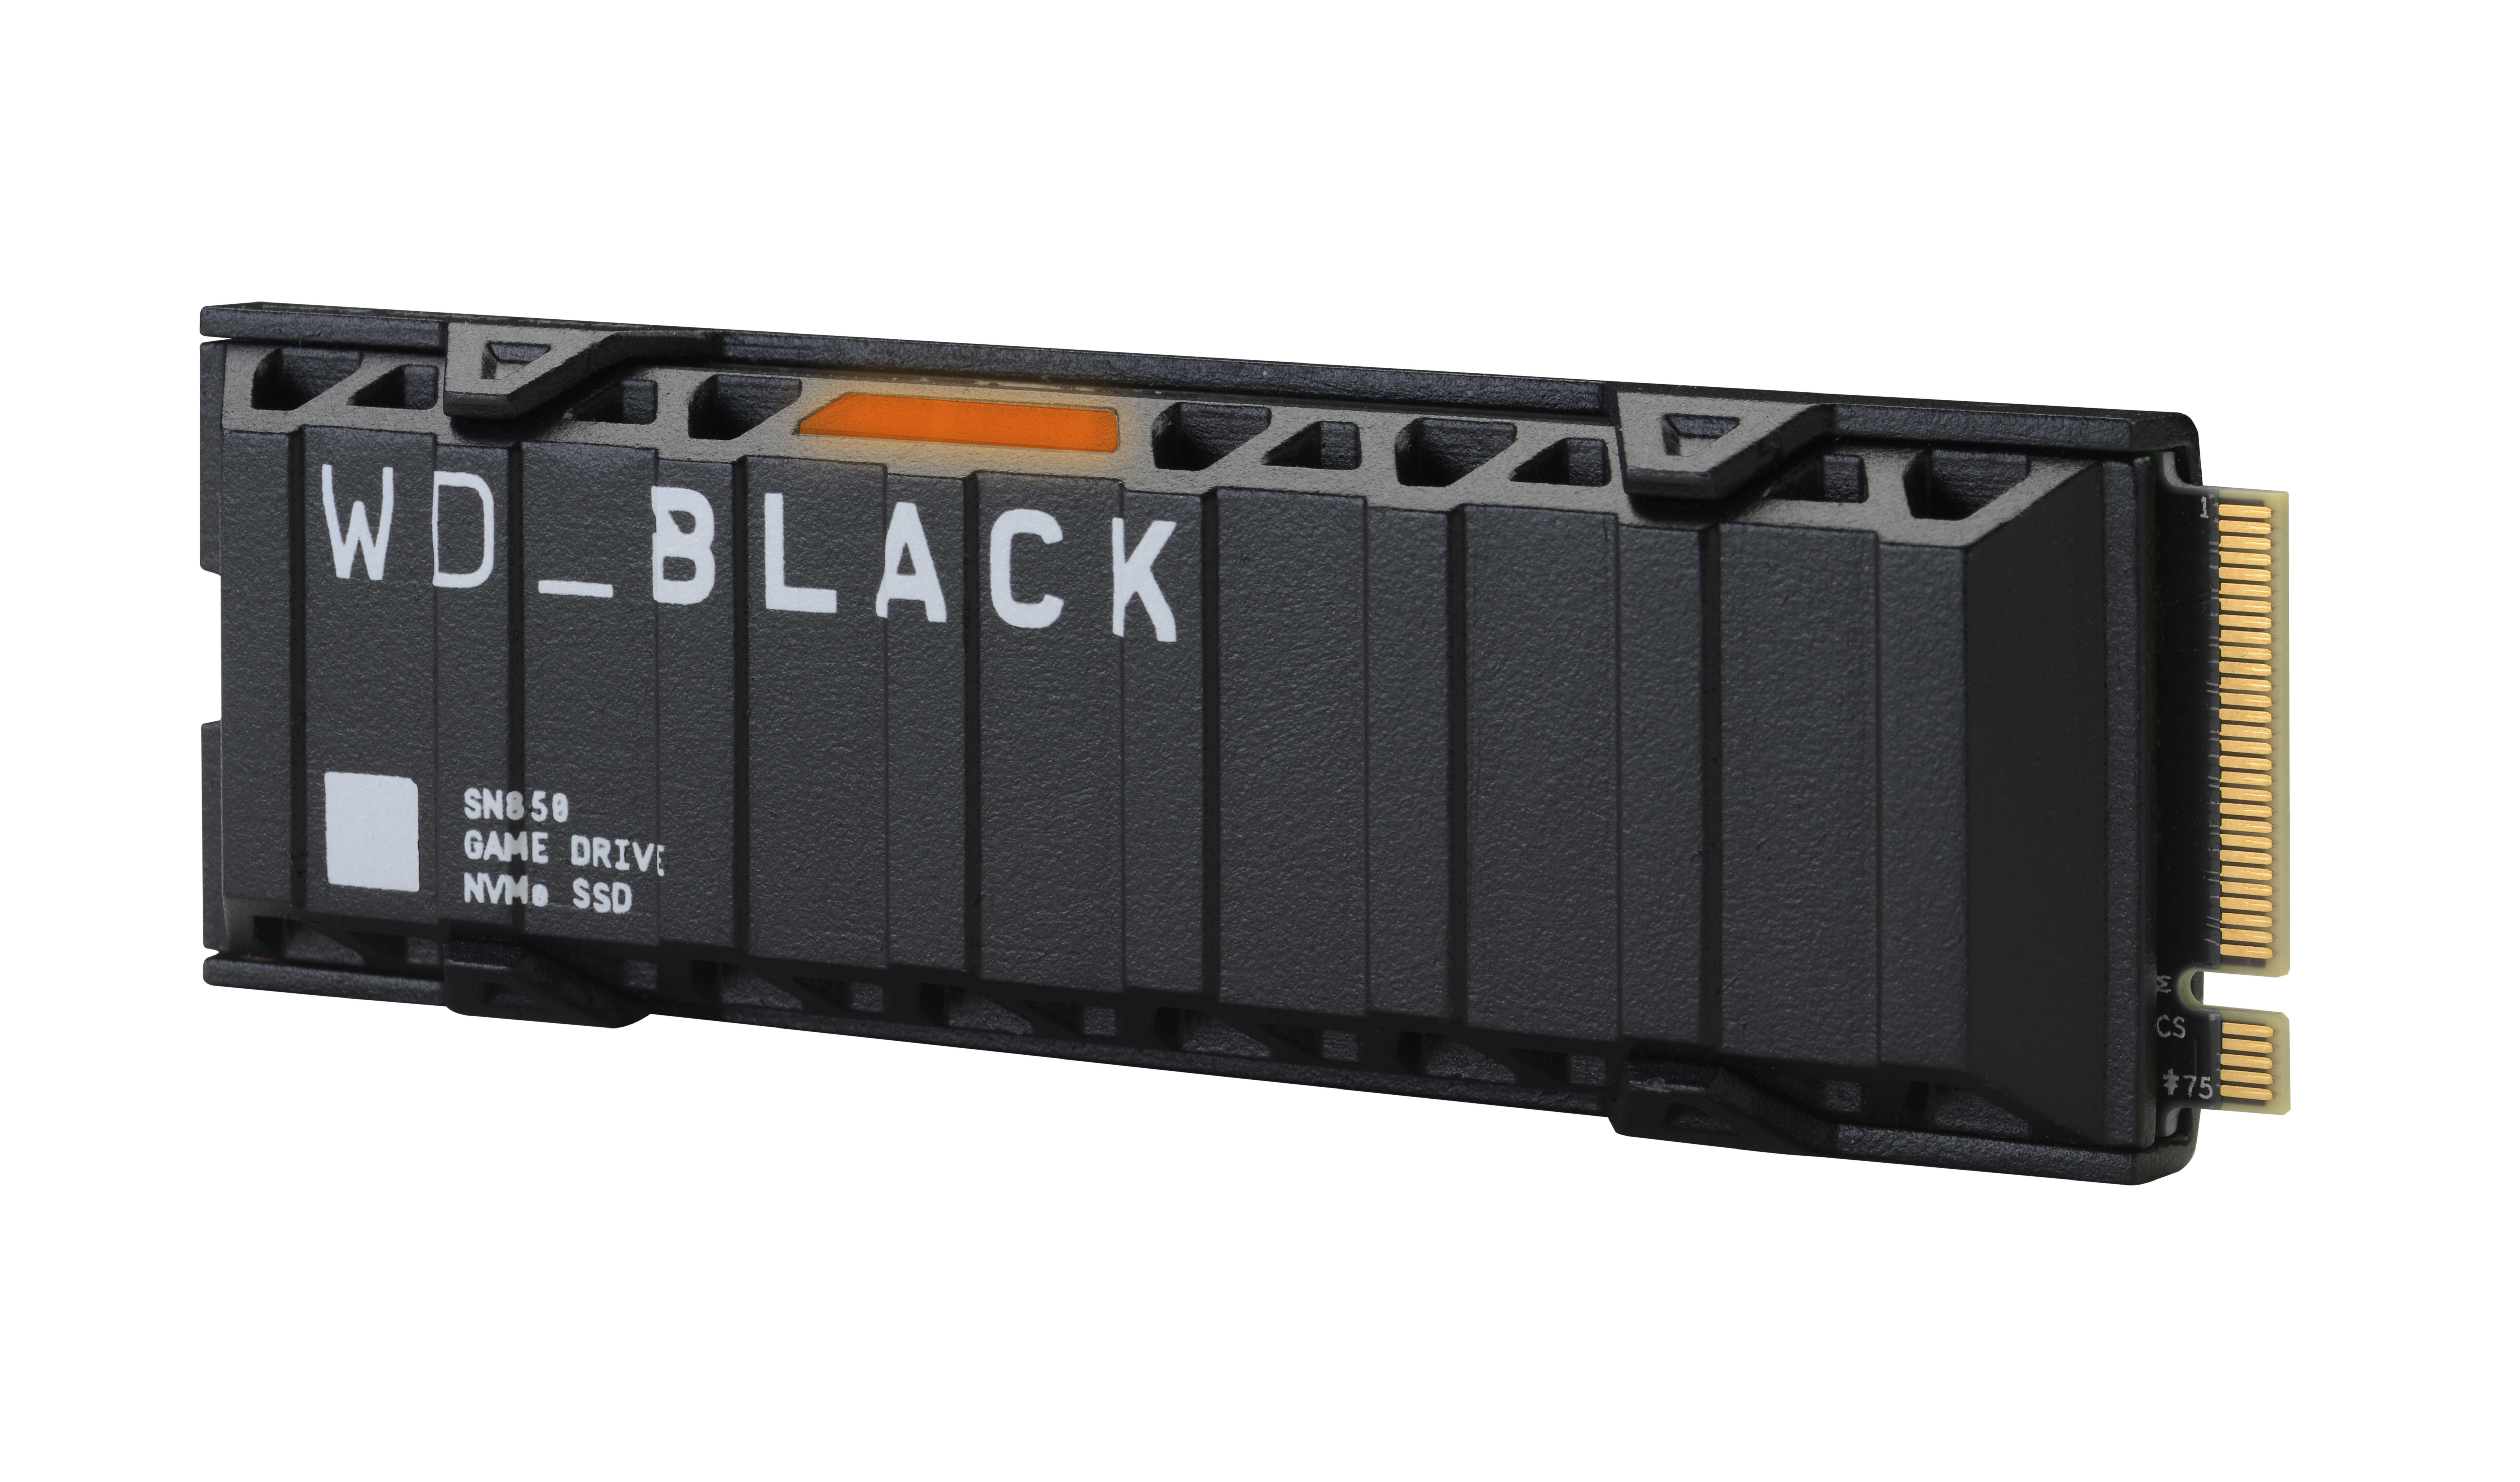 WD_BLACK SN850 PCI Kühlkörper 5*, SSD PlayStation™ intern TB with Express, 1 Gaming - Works SSD, mit